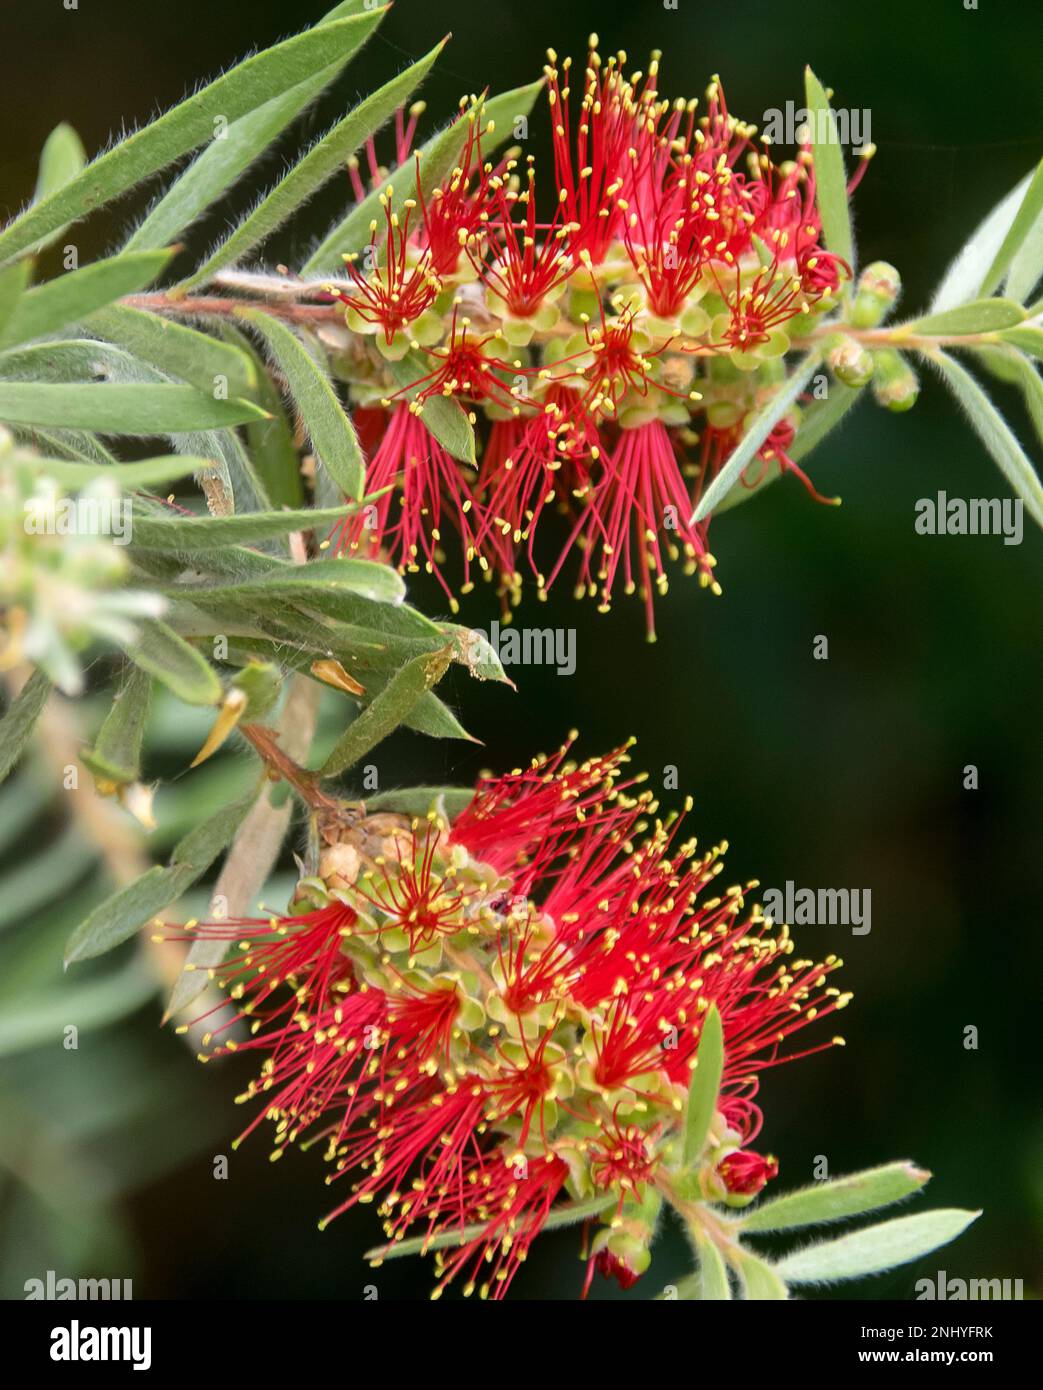 Close-up two bright red flowers, with yellow tips, Australian bottlebrush, Callistemon Little John. Queensland garden, pale leaves, black background. Stock Photo